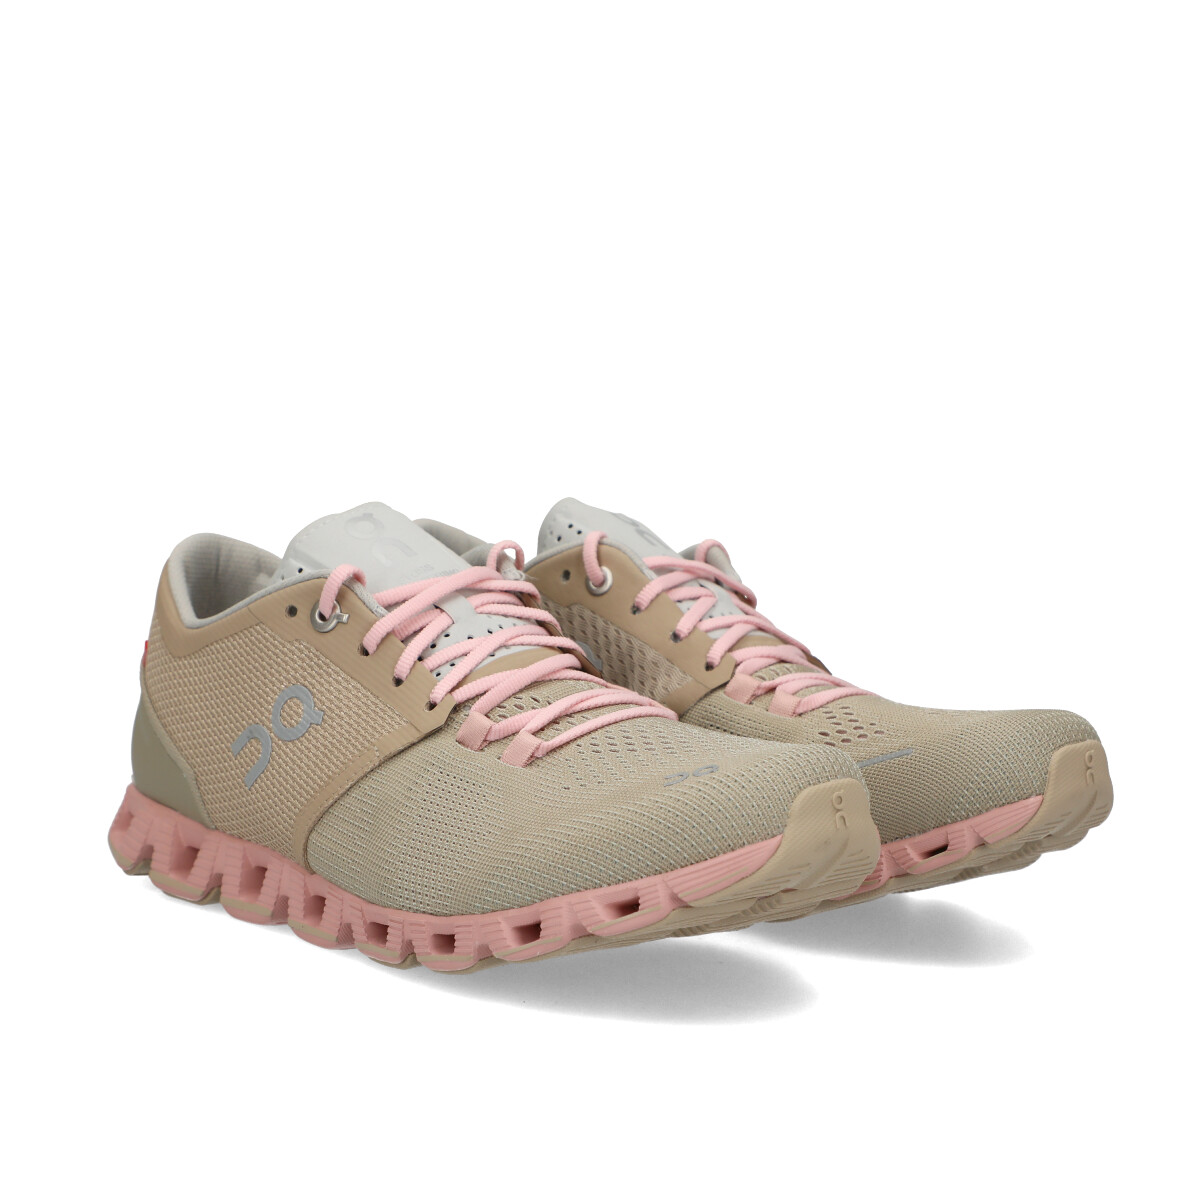 x trail shoes